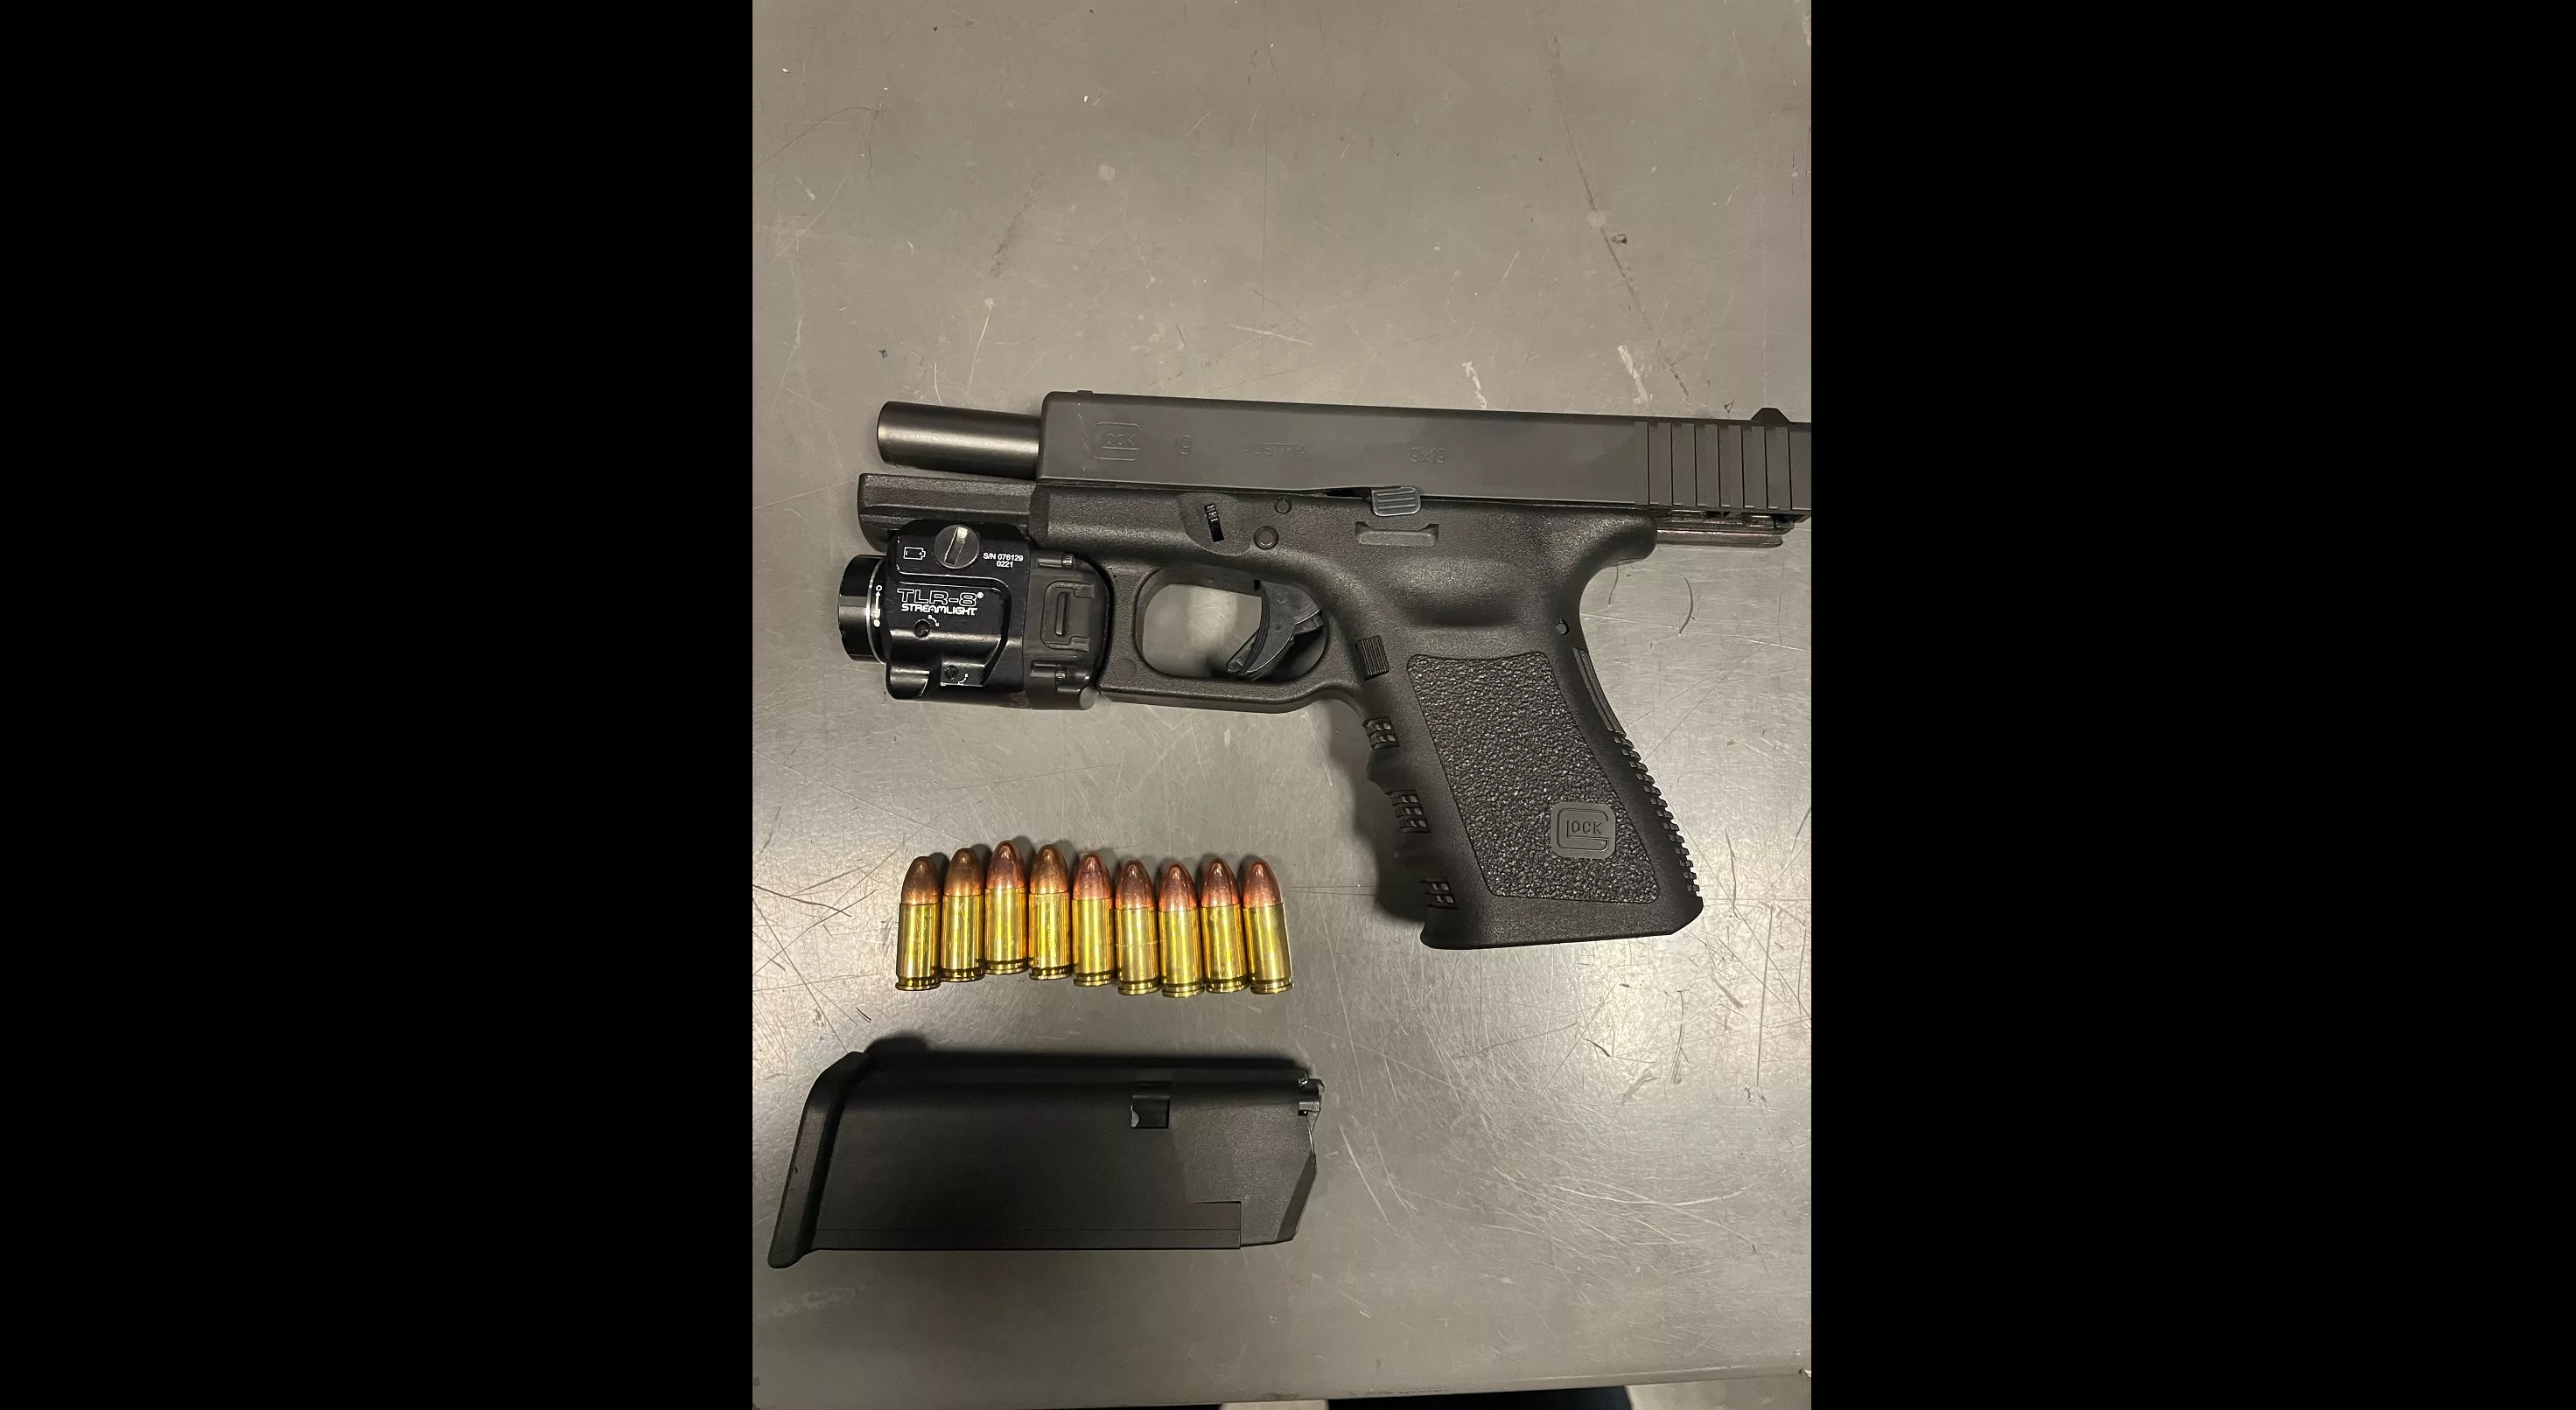 handgun-confiscated-from-jose-reyes-7-16-23-santa-rosa-police